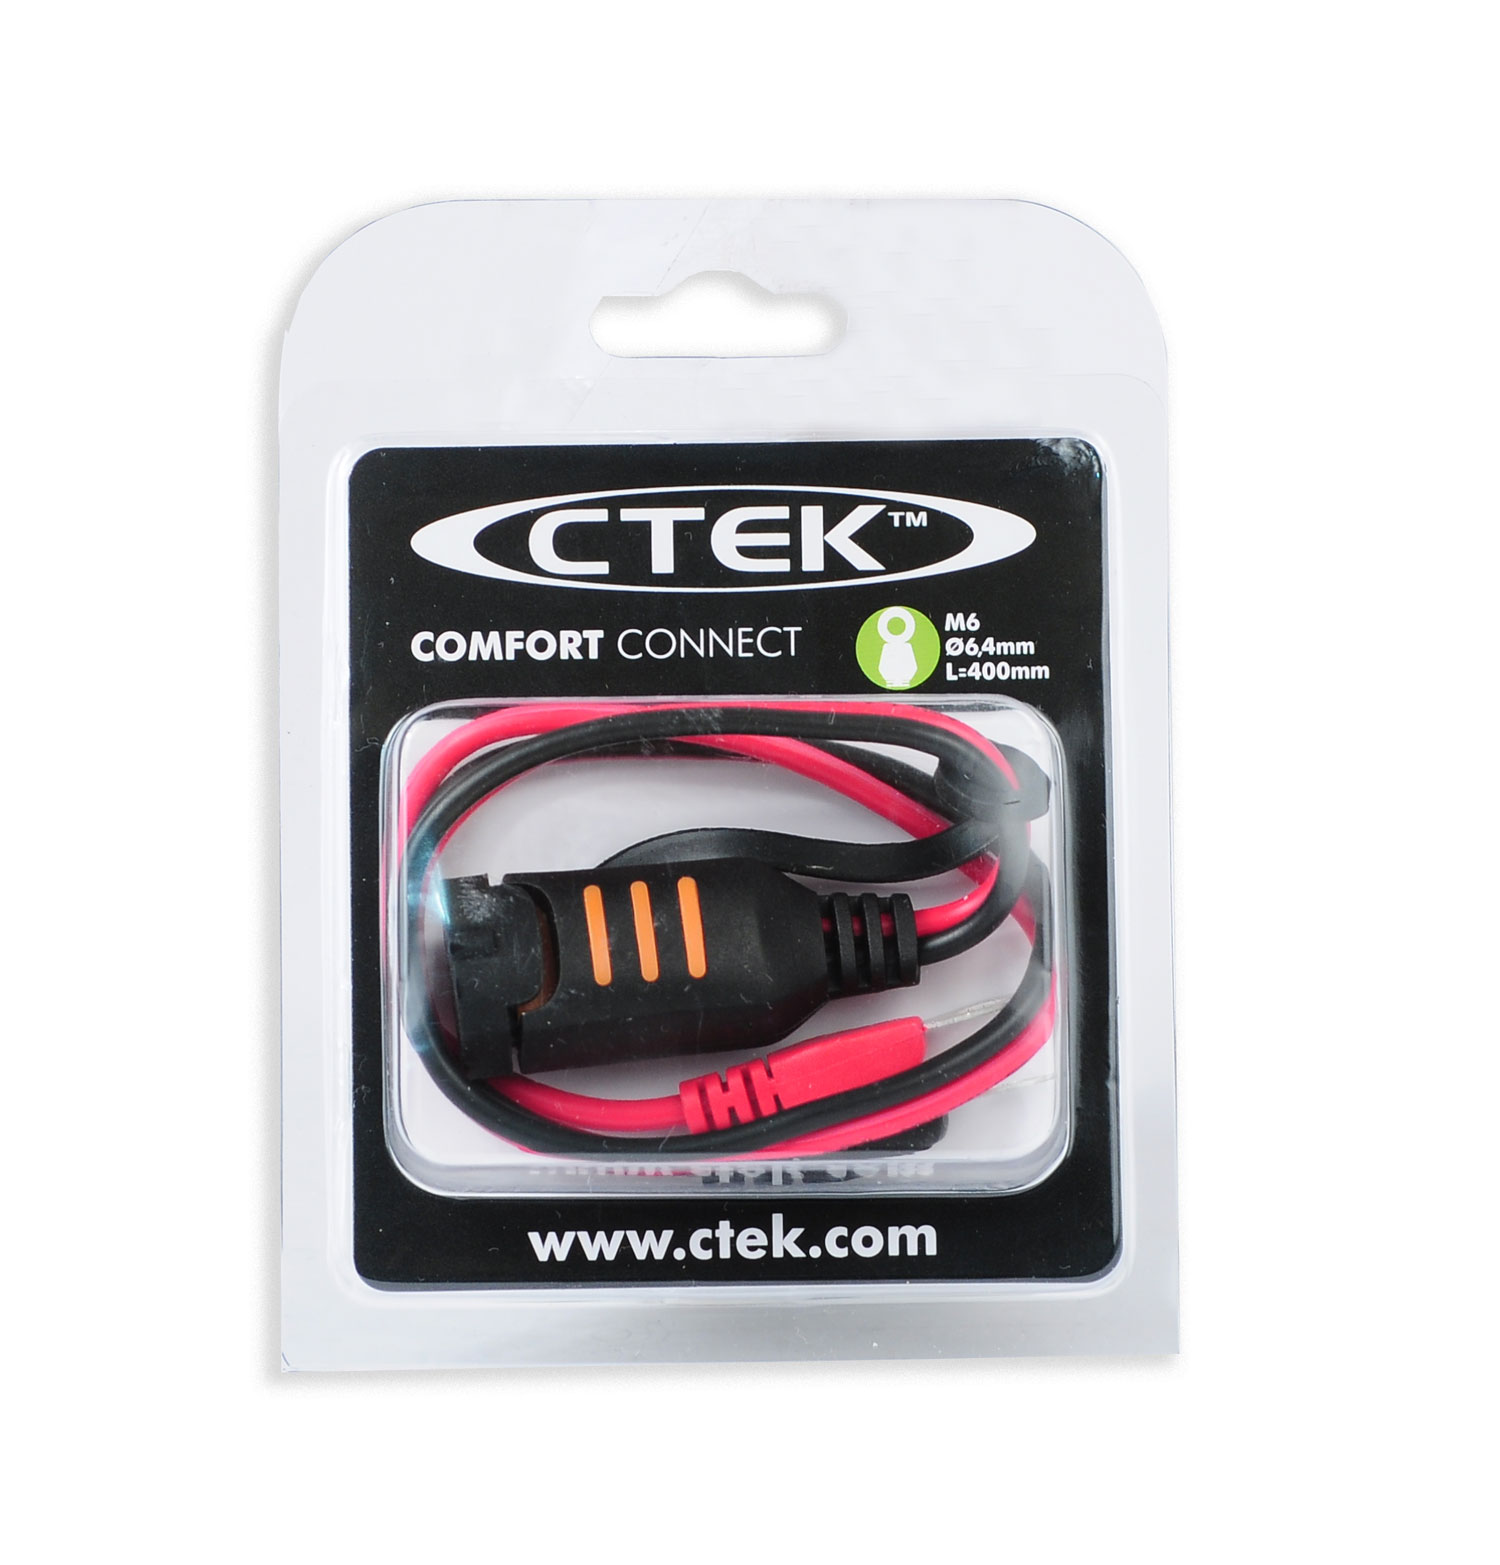 Ctek comfort connect M6 6,4mm Länge 400mm